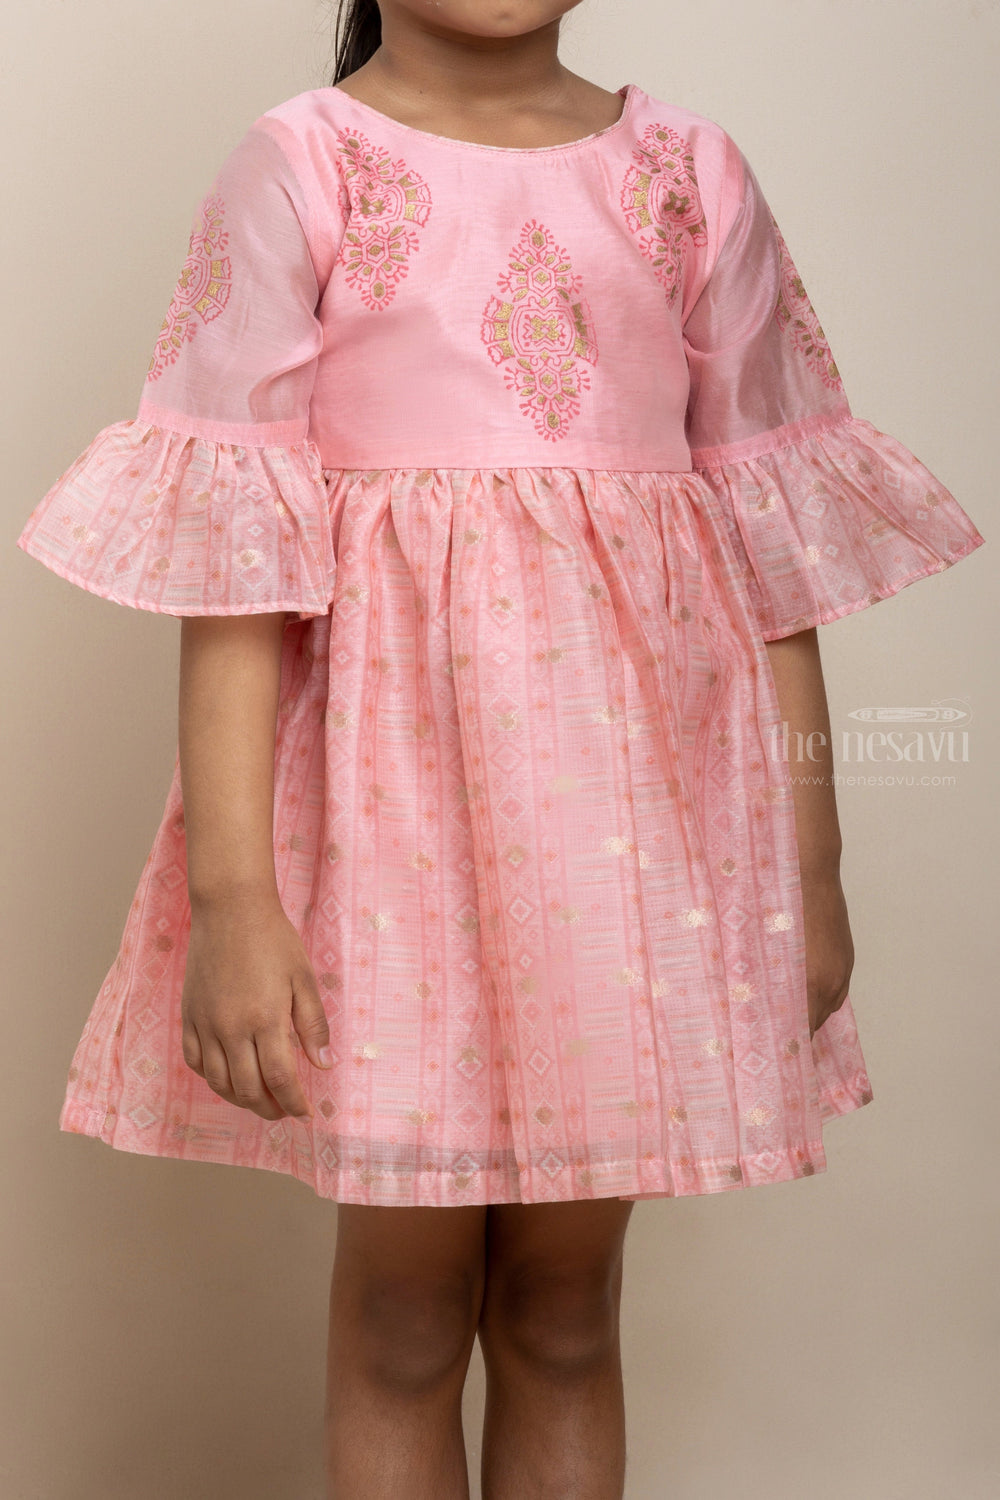 The Nesavu Frocks & Dresses Baby Pink Chanderi Silk Cotton Printed Festive Frock For Girls With Elbow Flutter Sleeve psr silks Nesavu